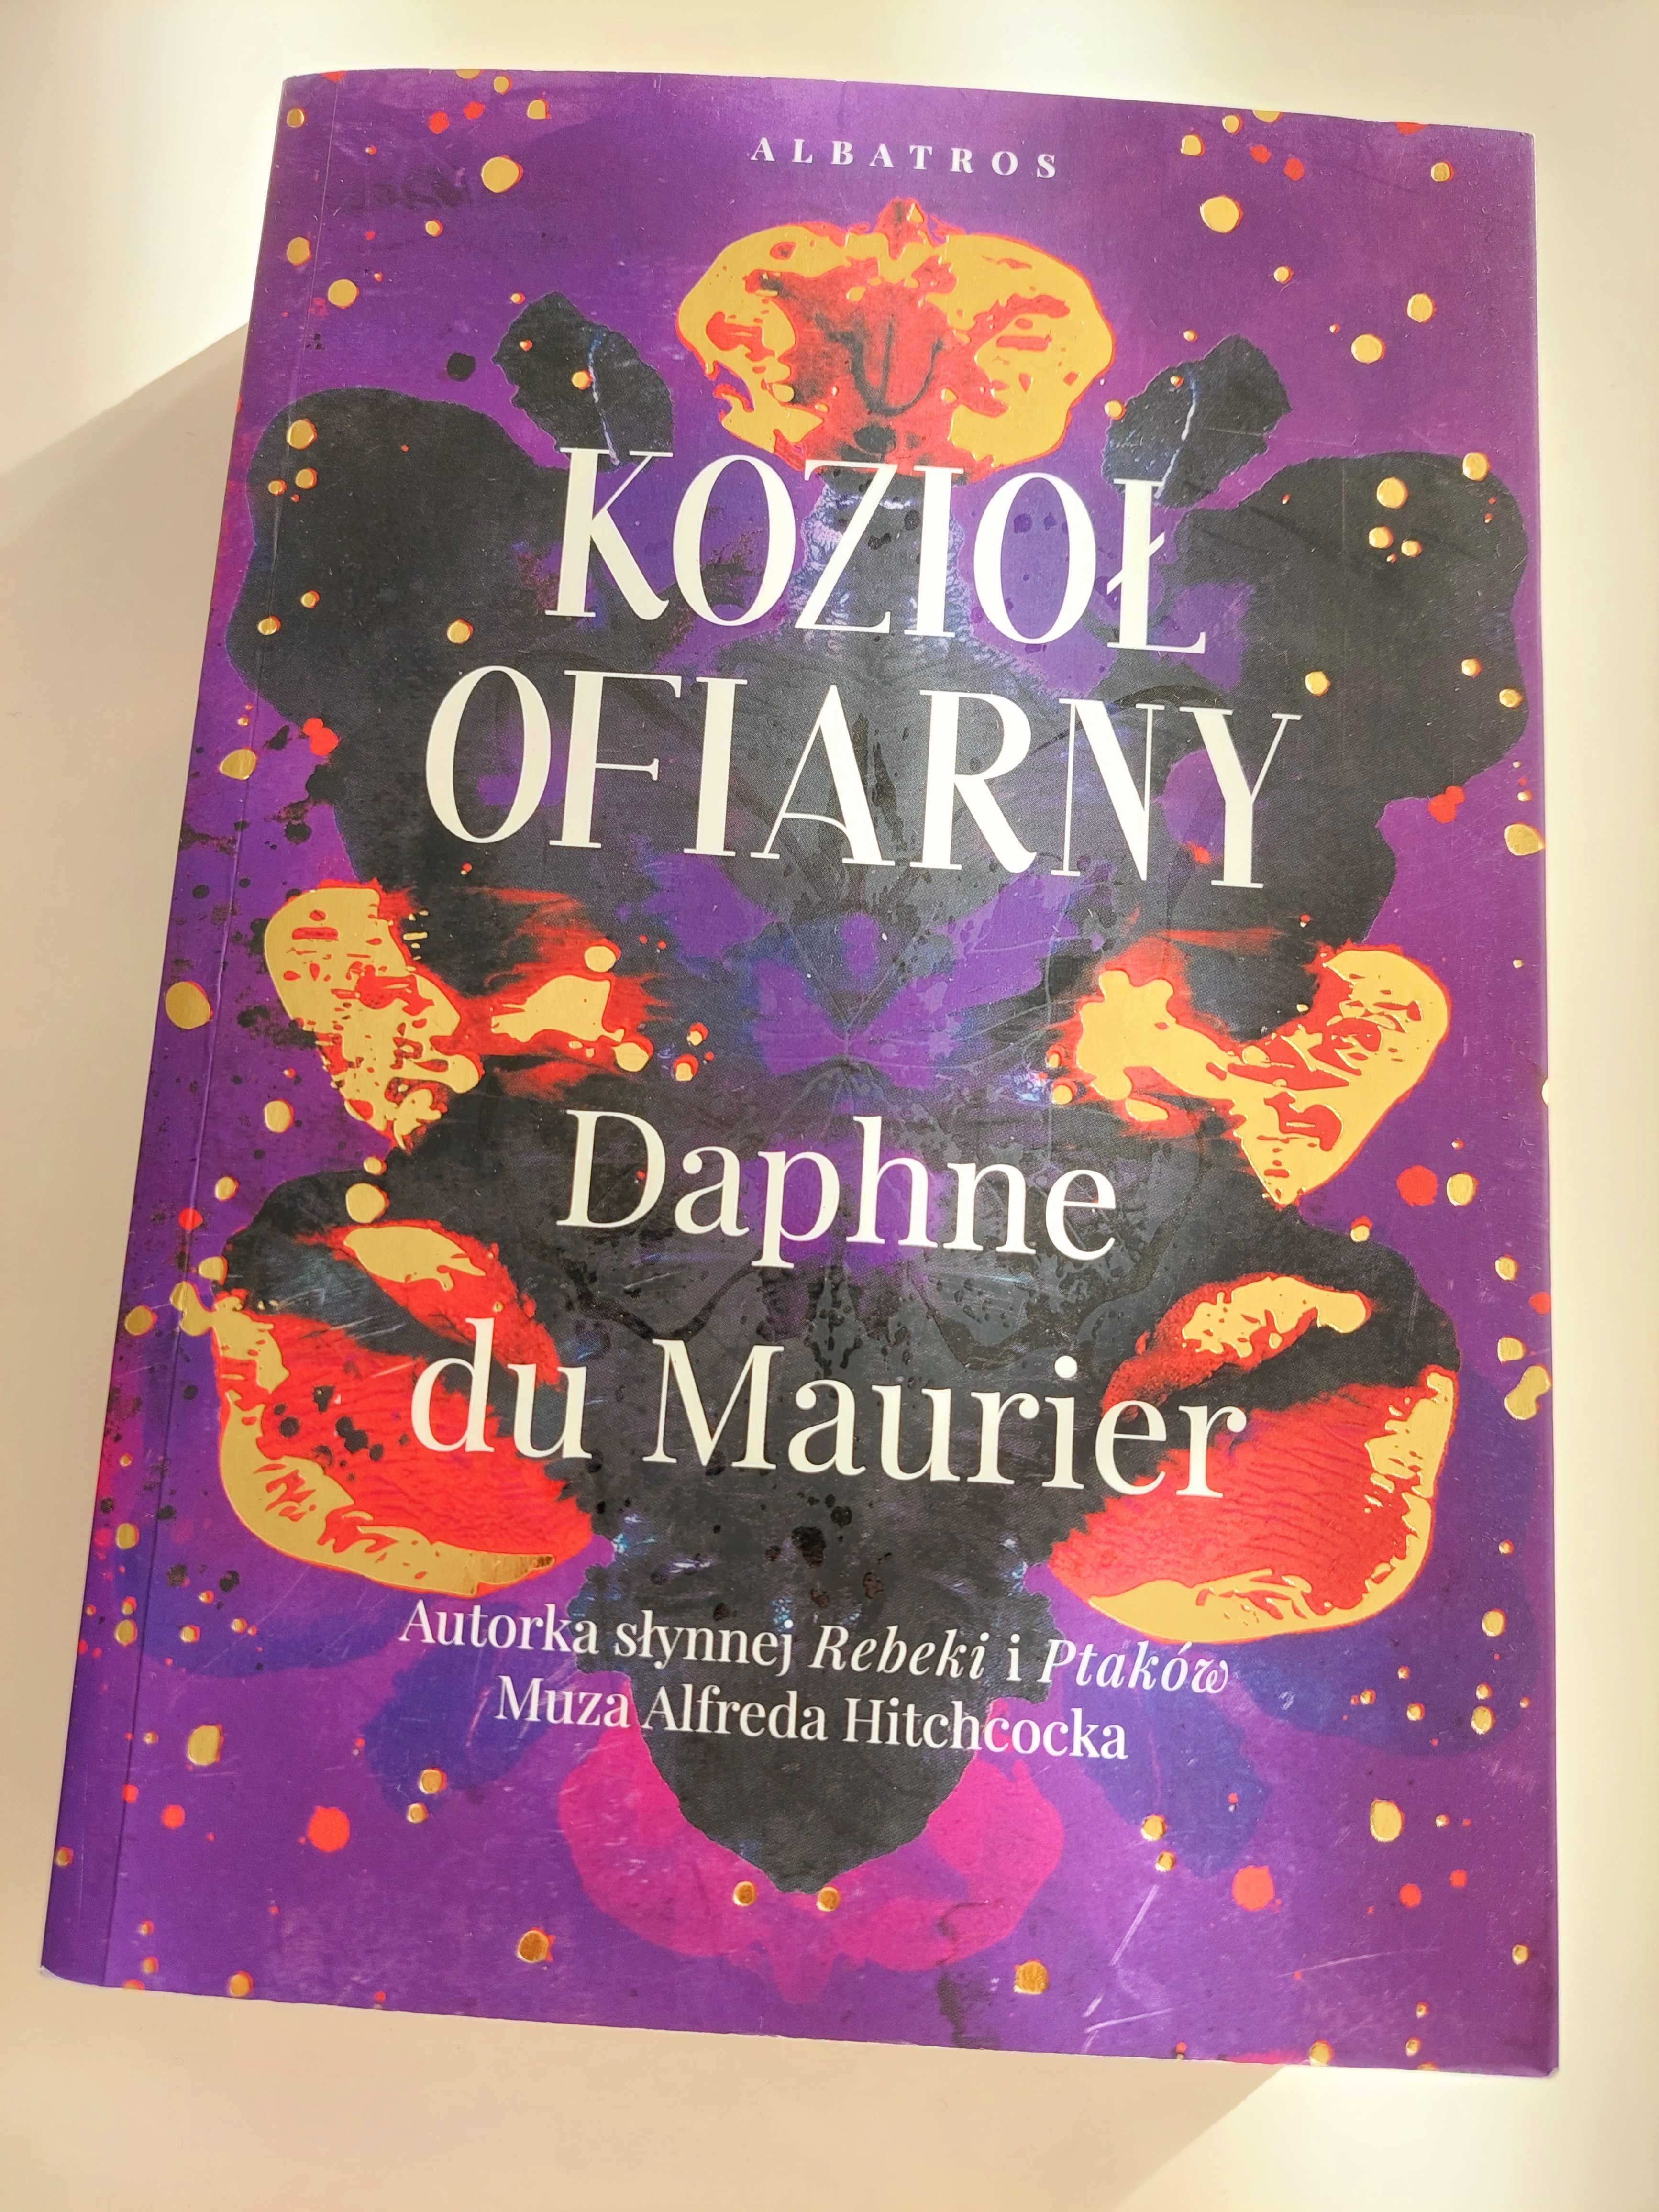 "Kozioł ofiarny" Daphne du Maurier